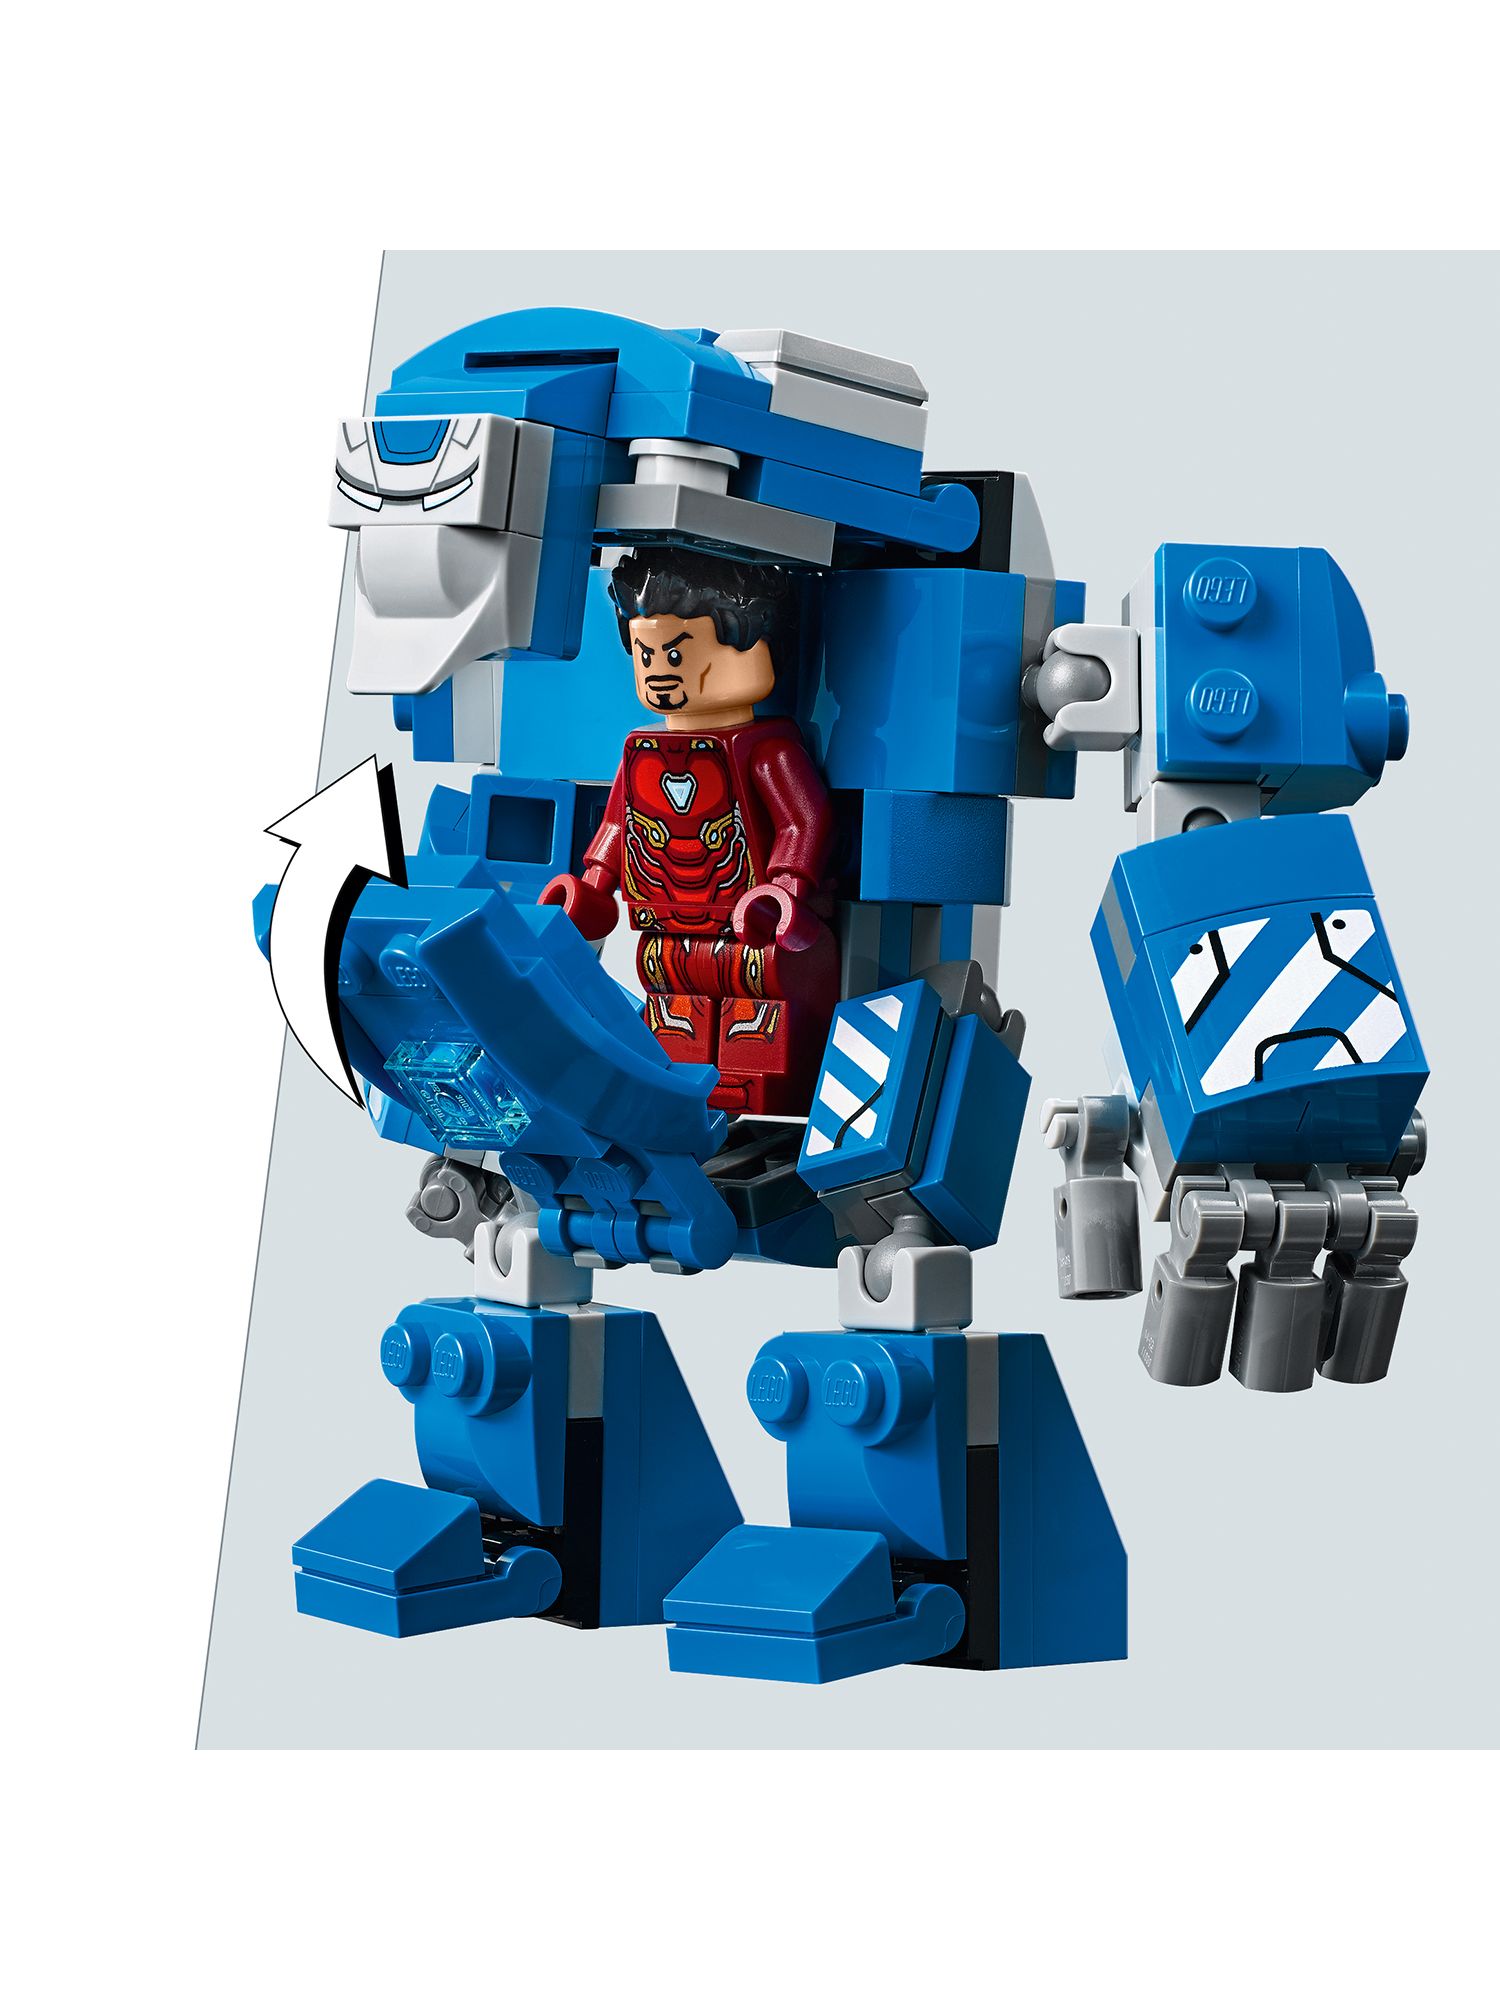 lego marvel avengers iron man hall of armor 76125 building kit